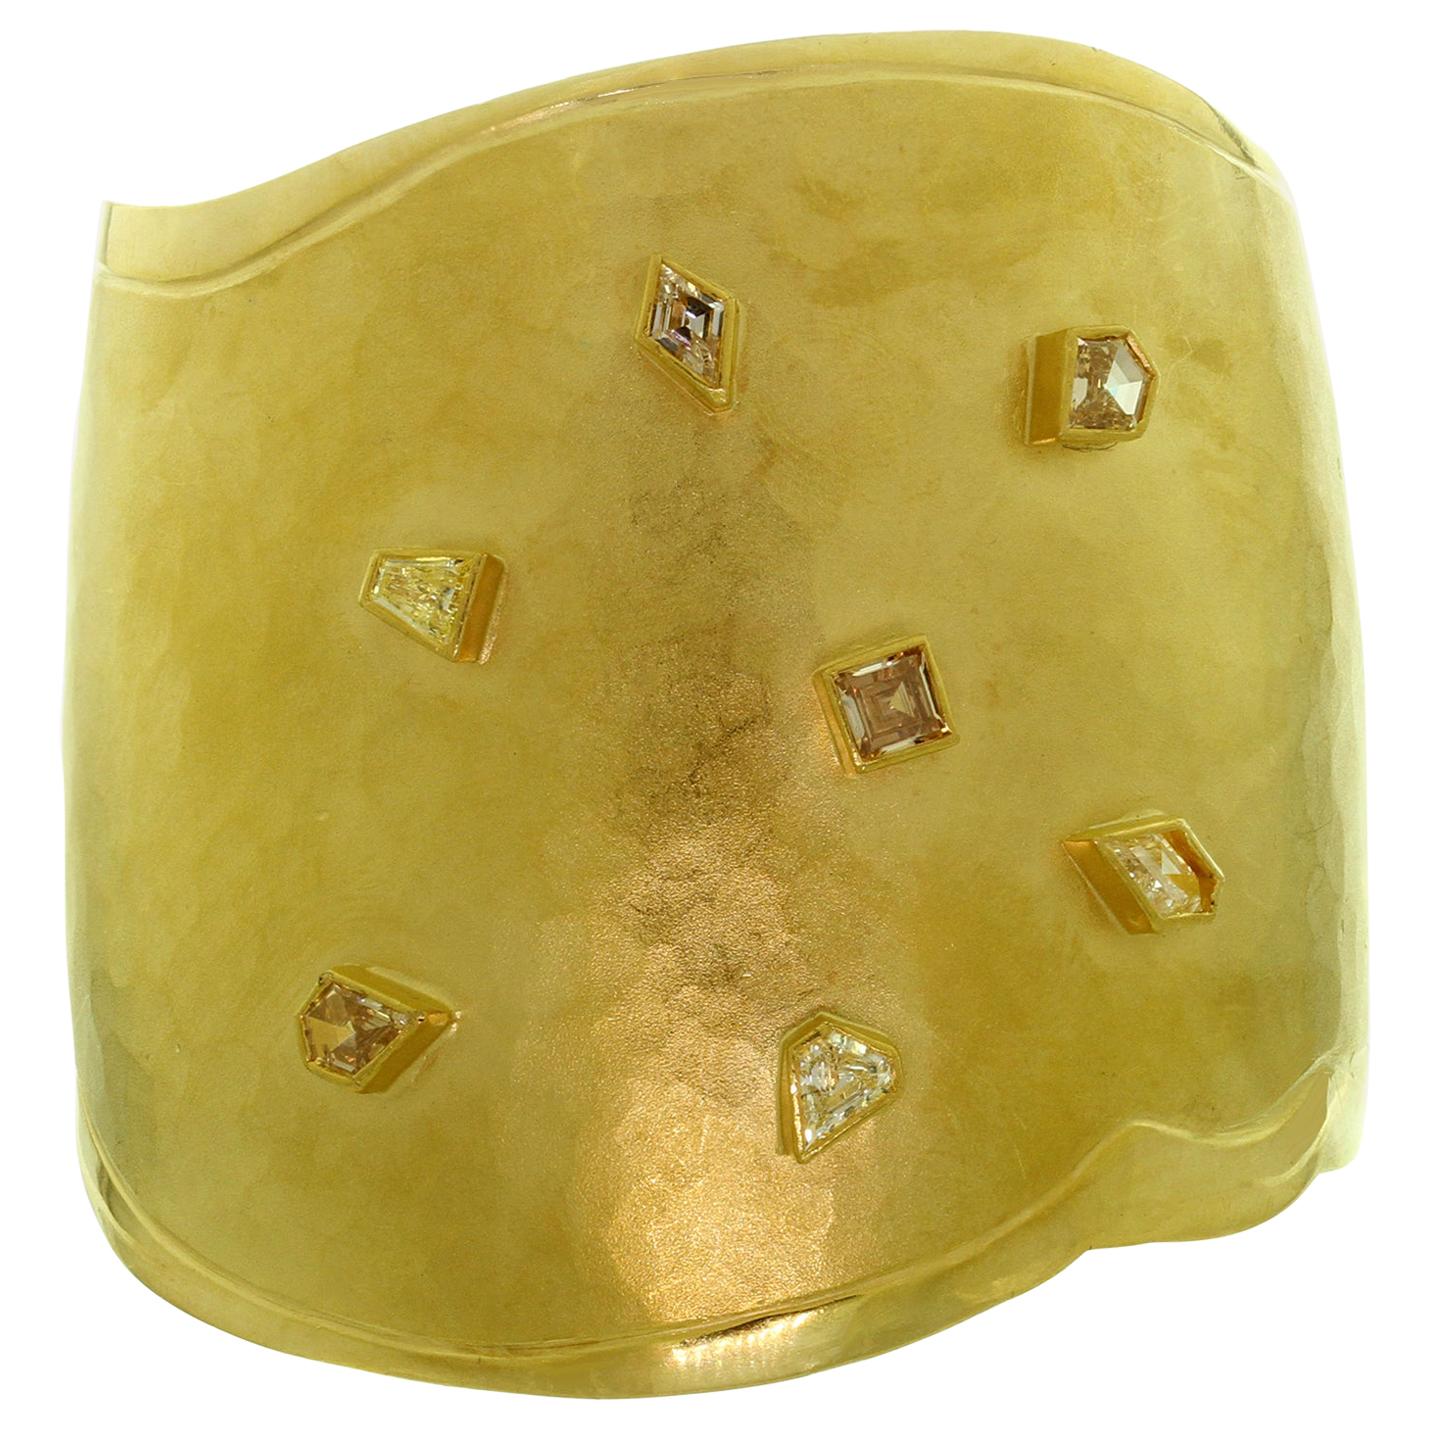  Fabulous TESS SHOLOM Diamond 22 Kt. Yellow Gold Open Wide Cuff Bangle Bracelet